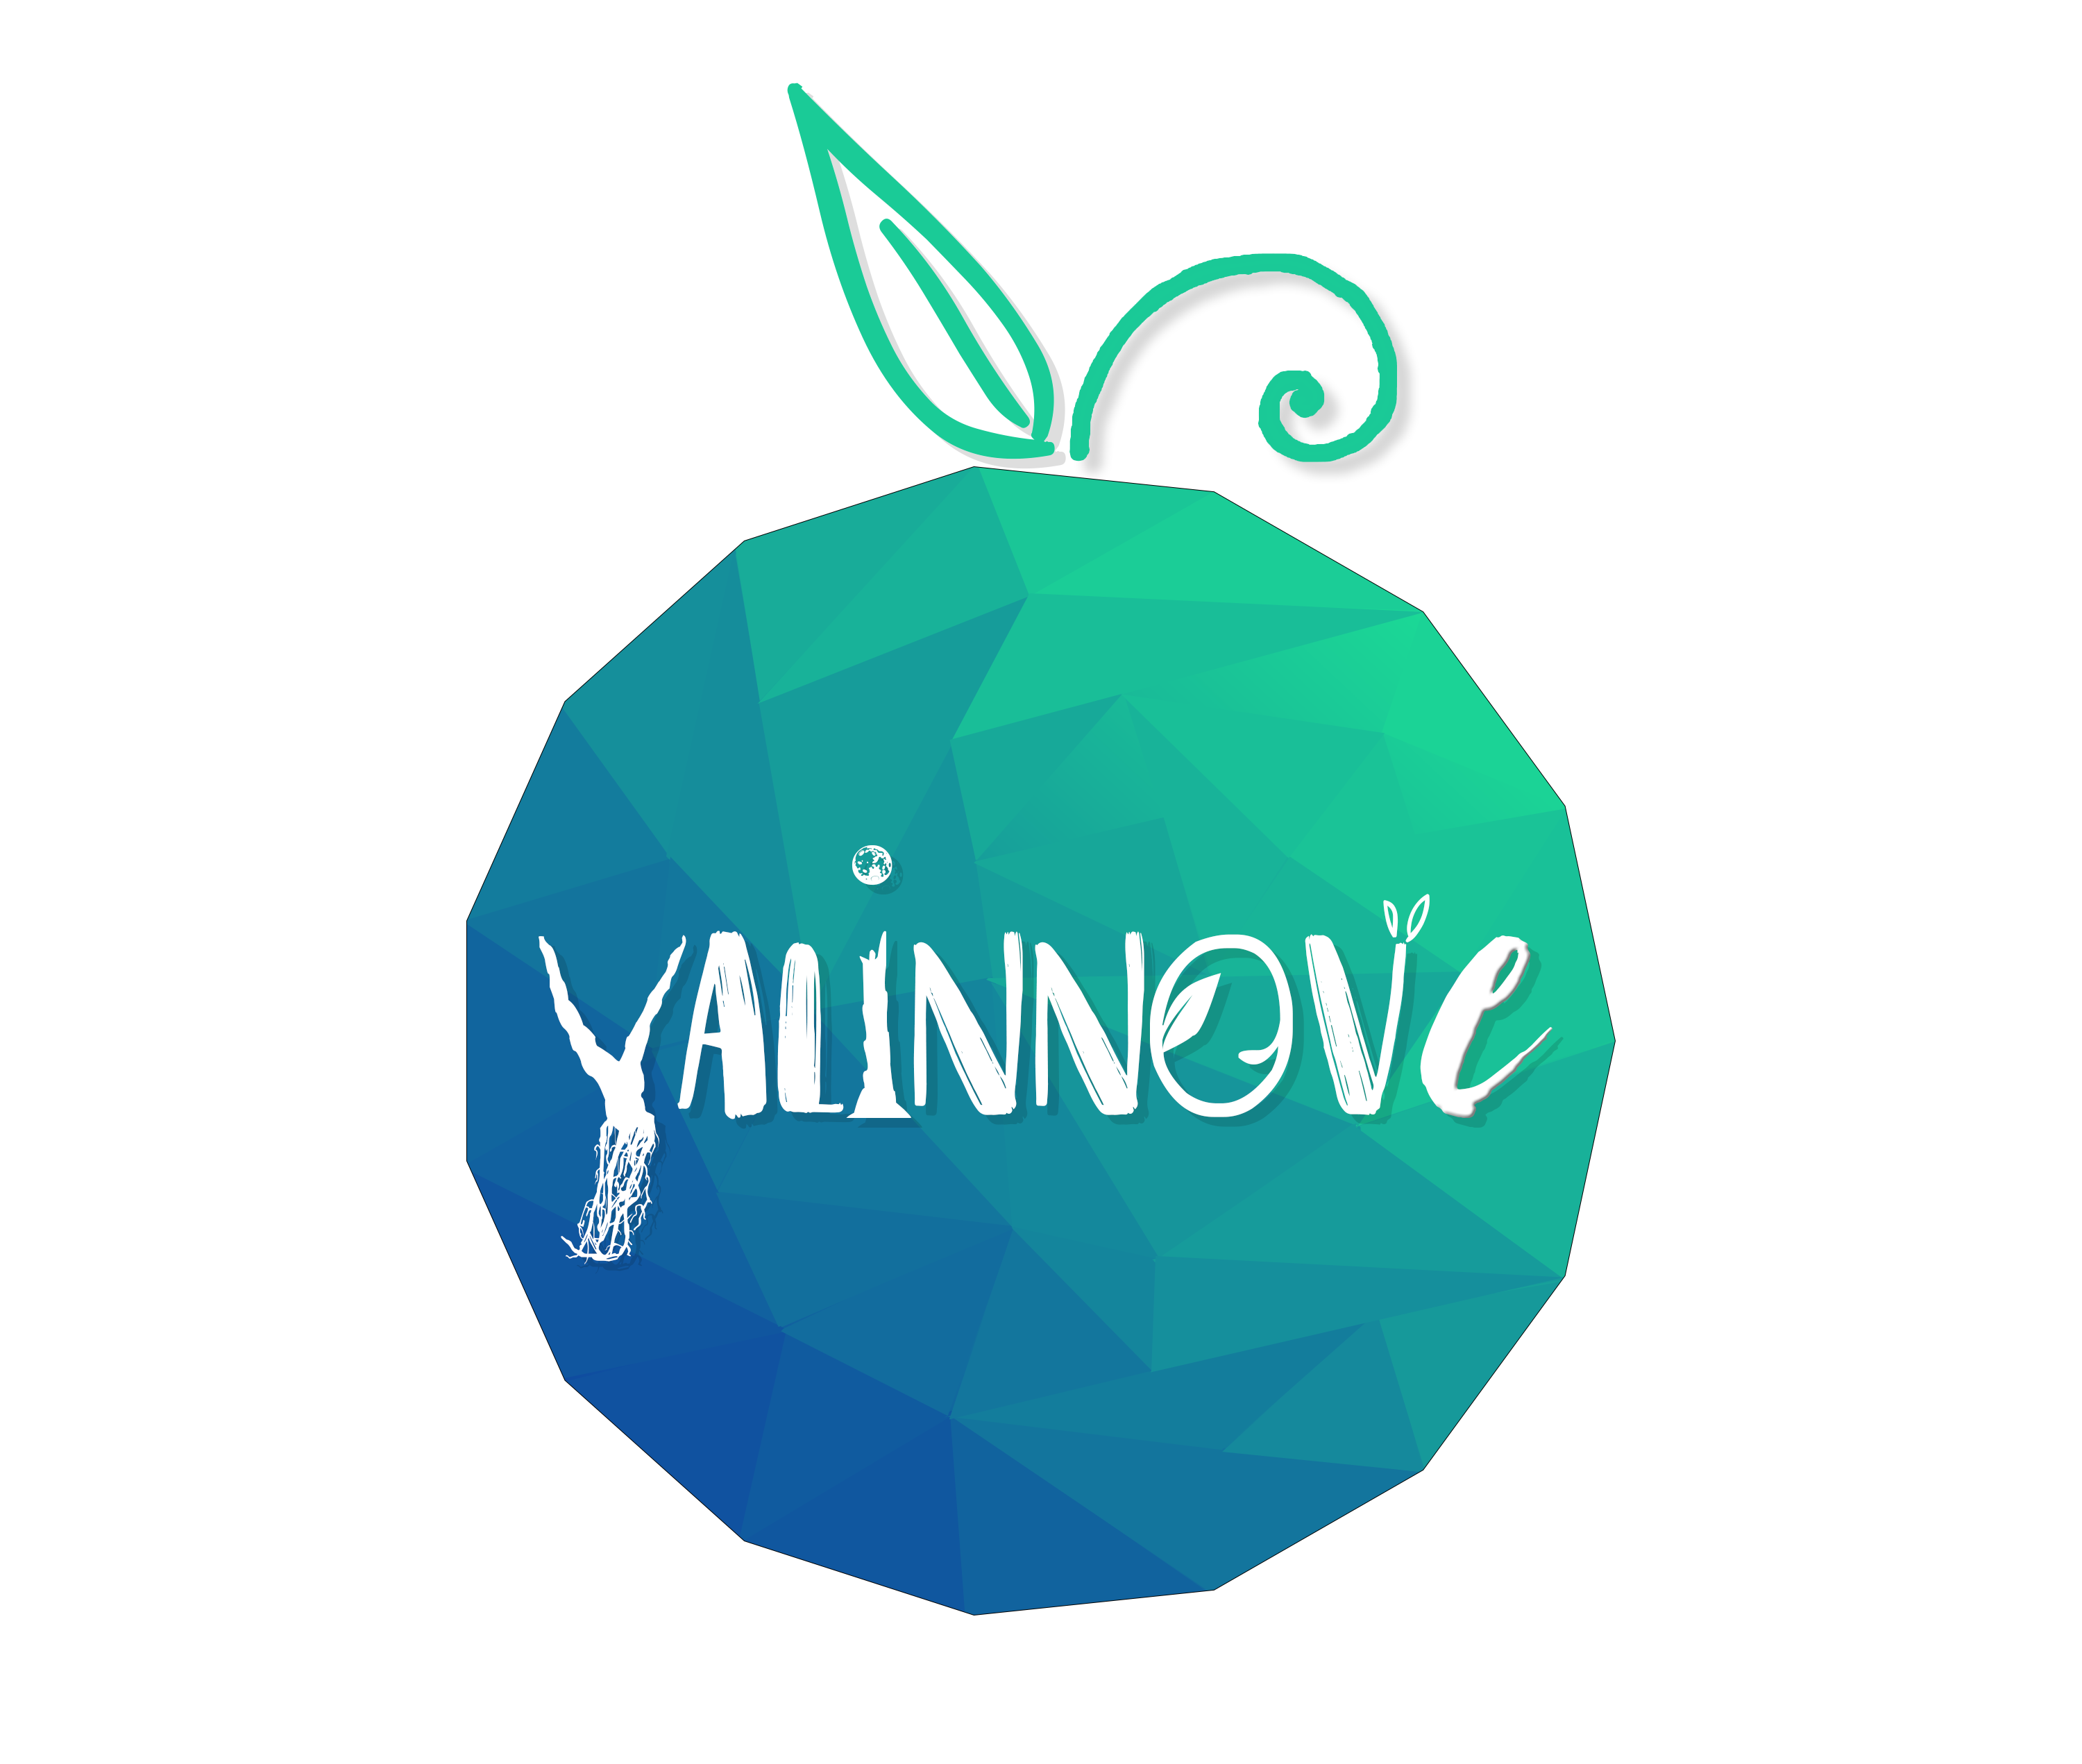 Yalinnove